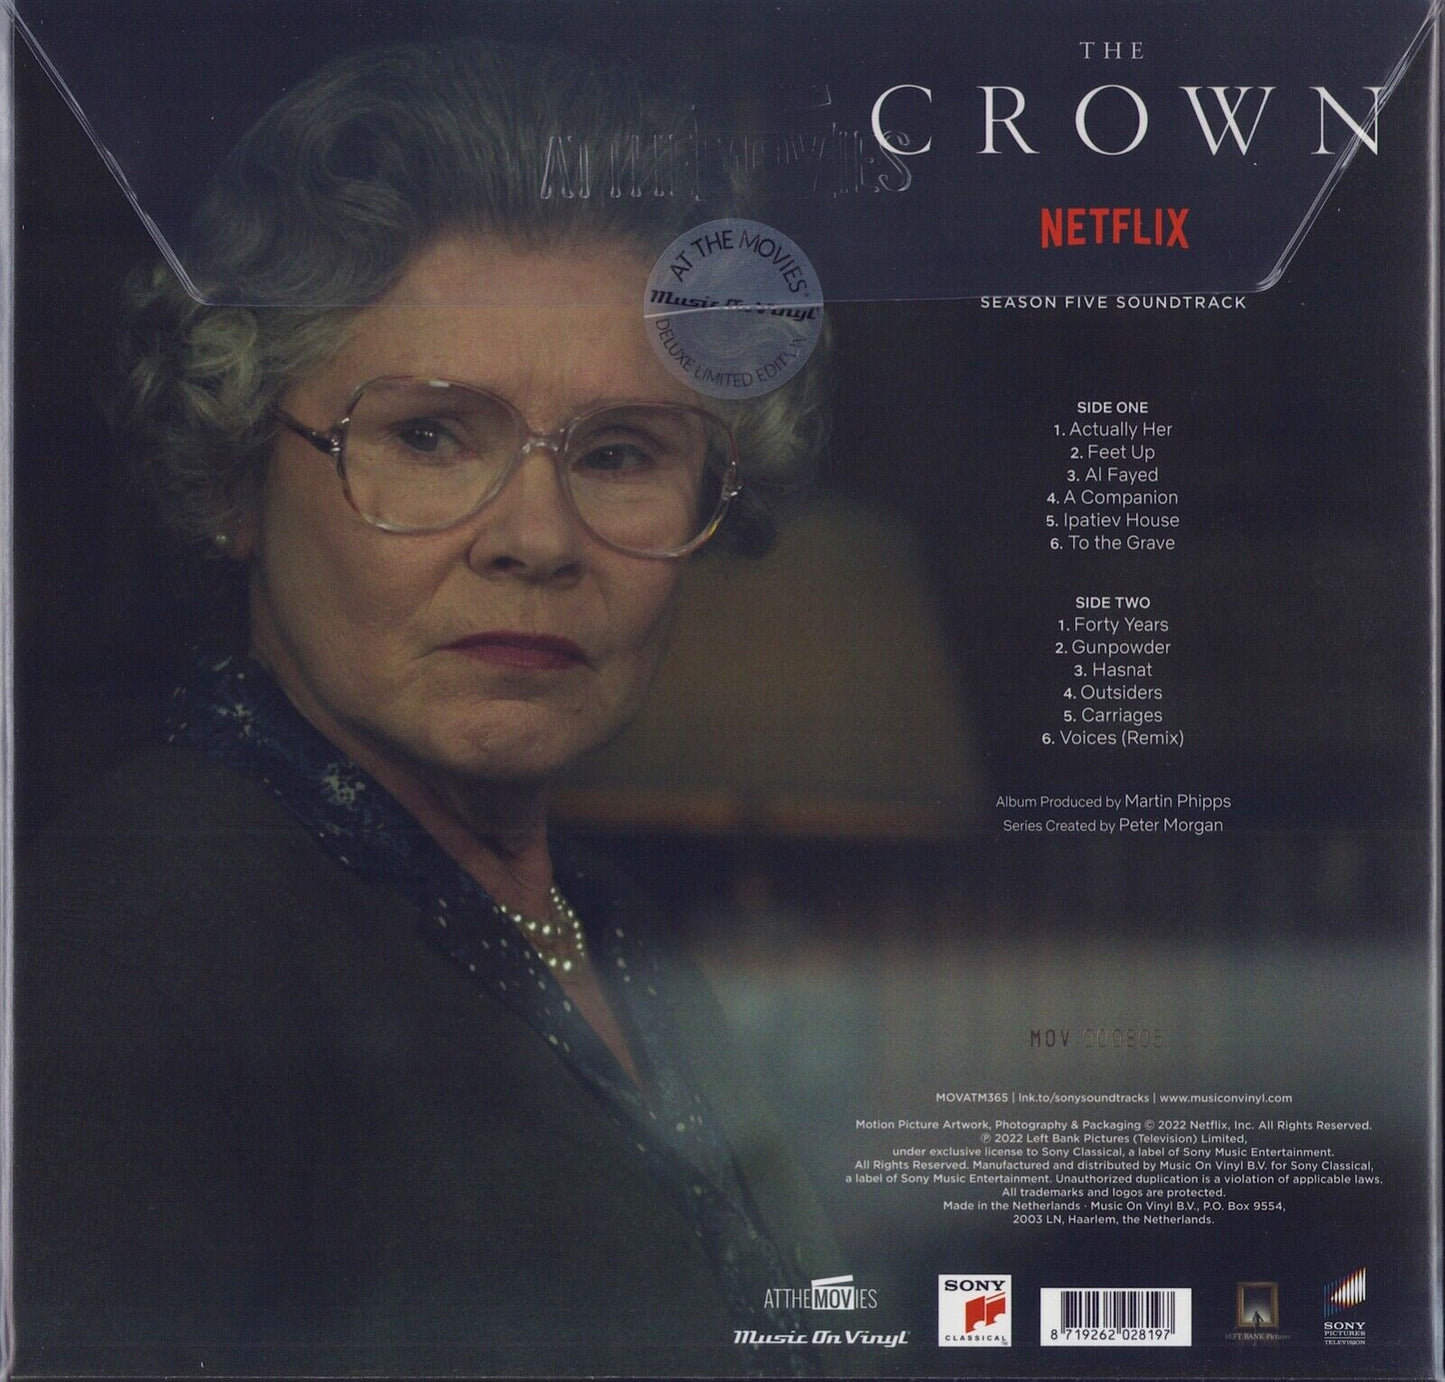 Martin Phipps - The Crown: Season 5 Soundtrack Netflix Royal Blue Vinyl LP Limited Edition